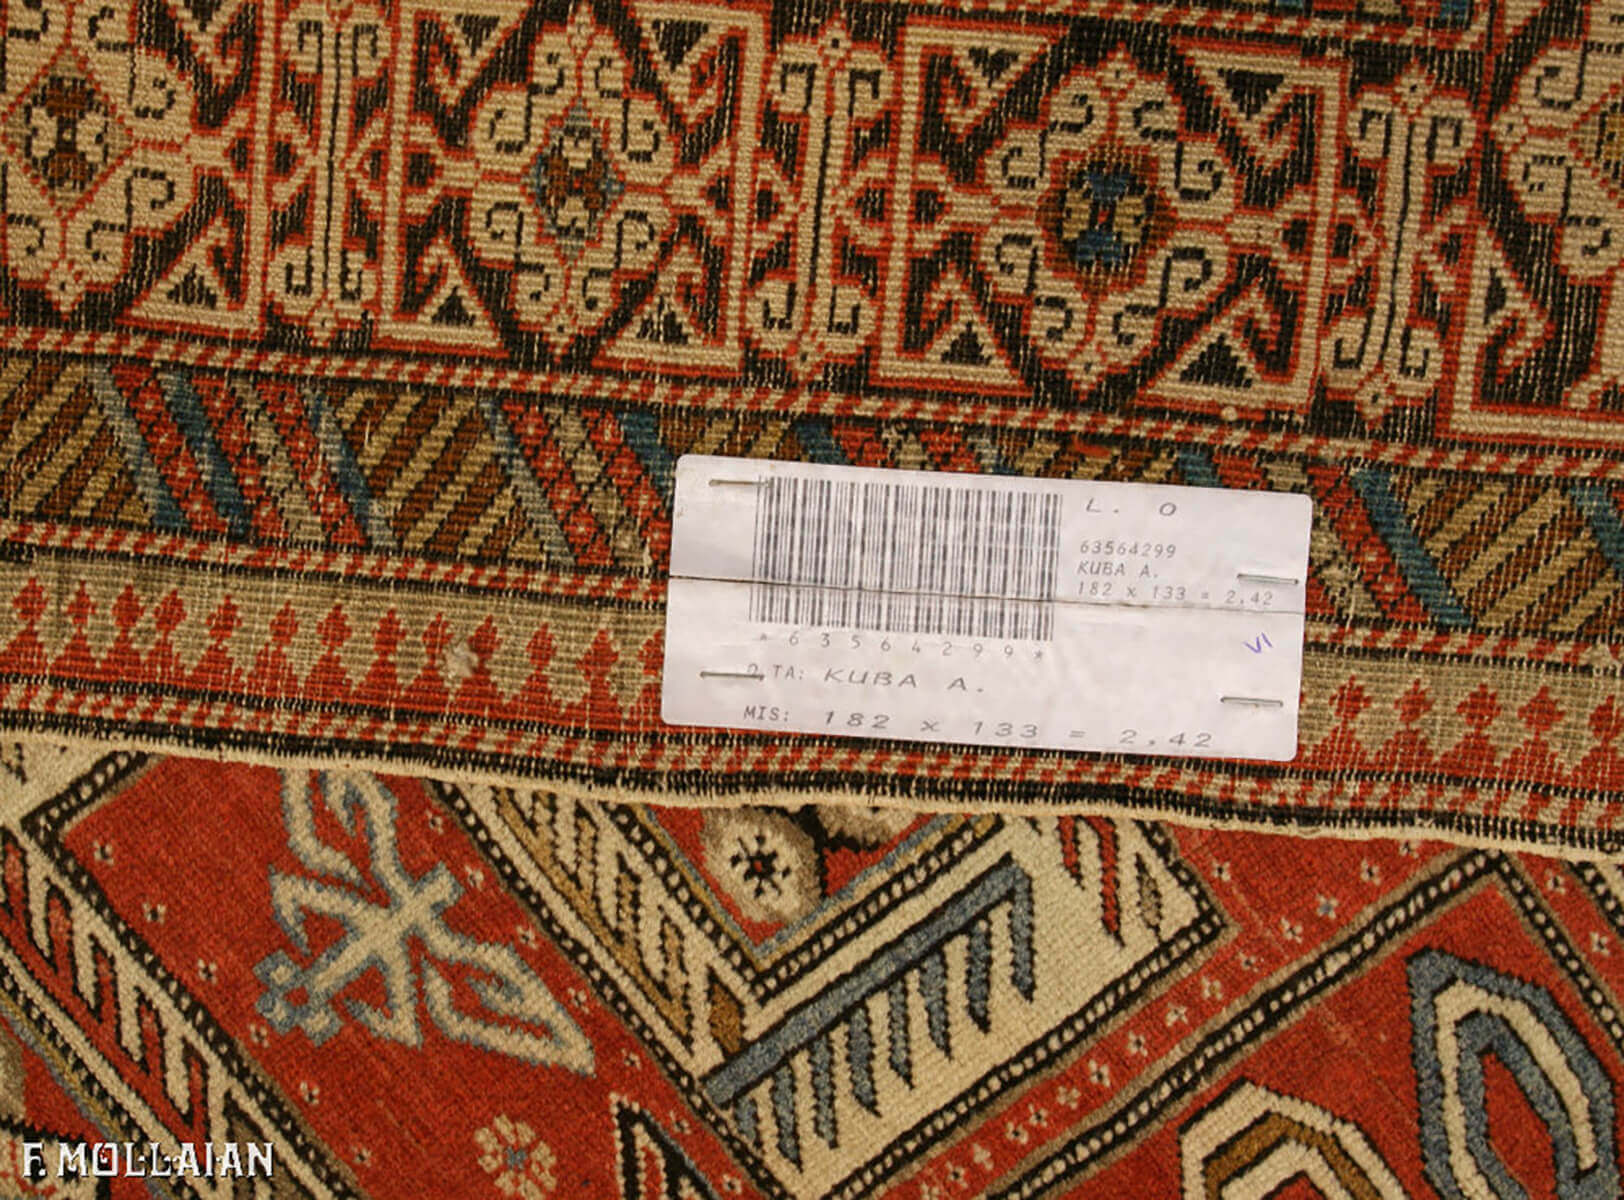 Tappeto Antico Caucasico Kuba (Quba) n°:63564299